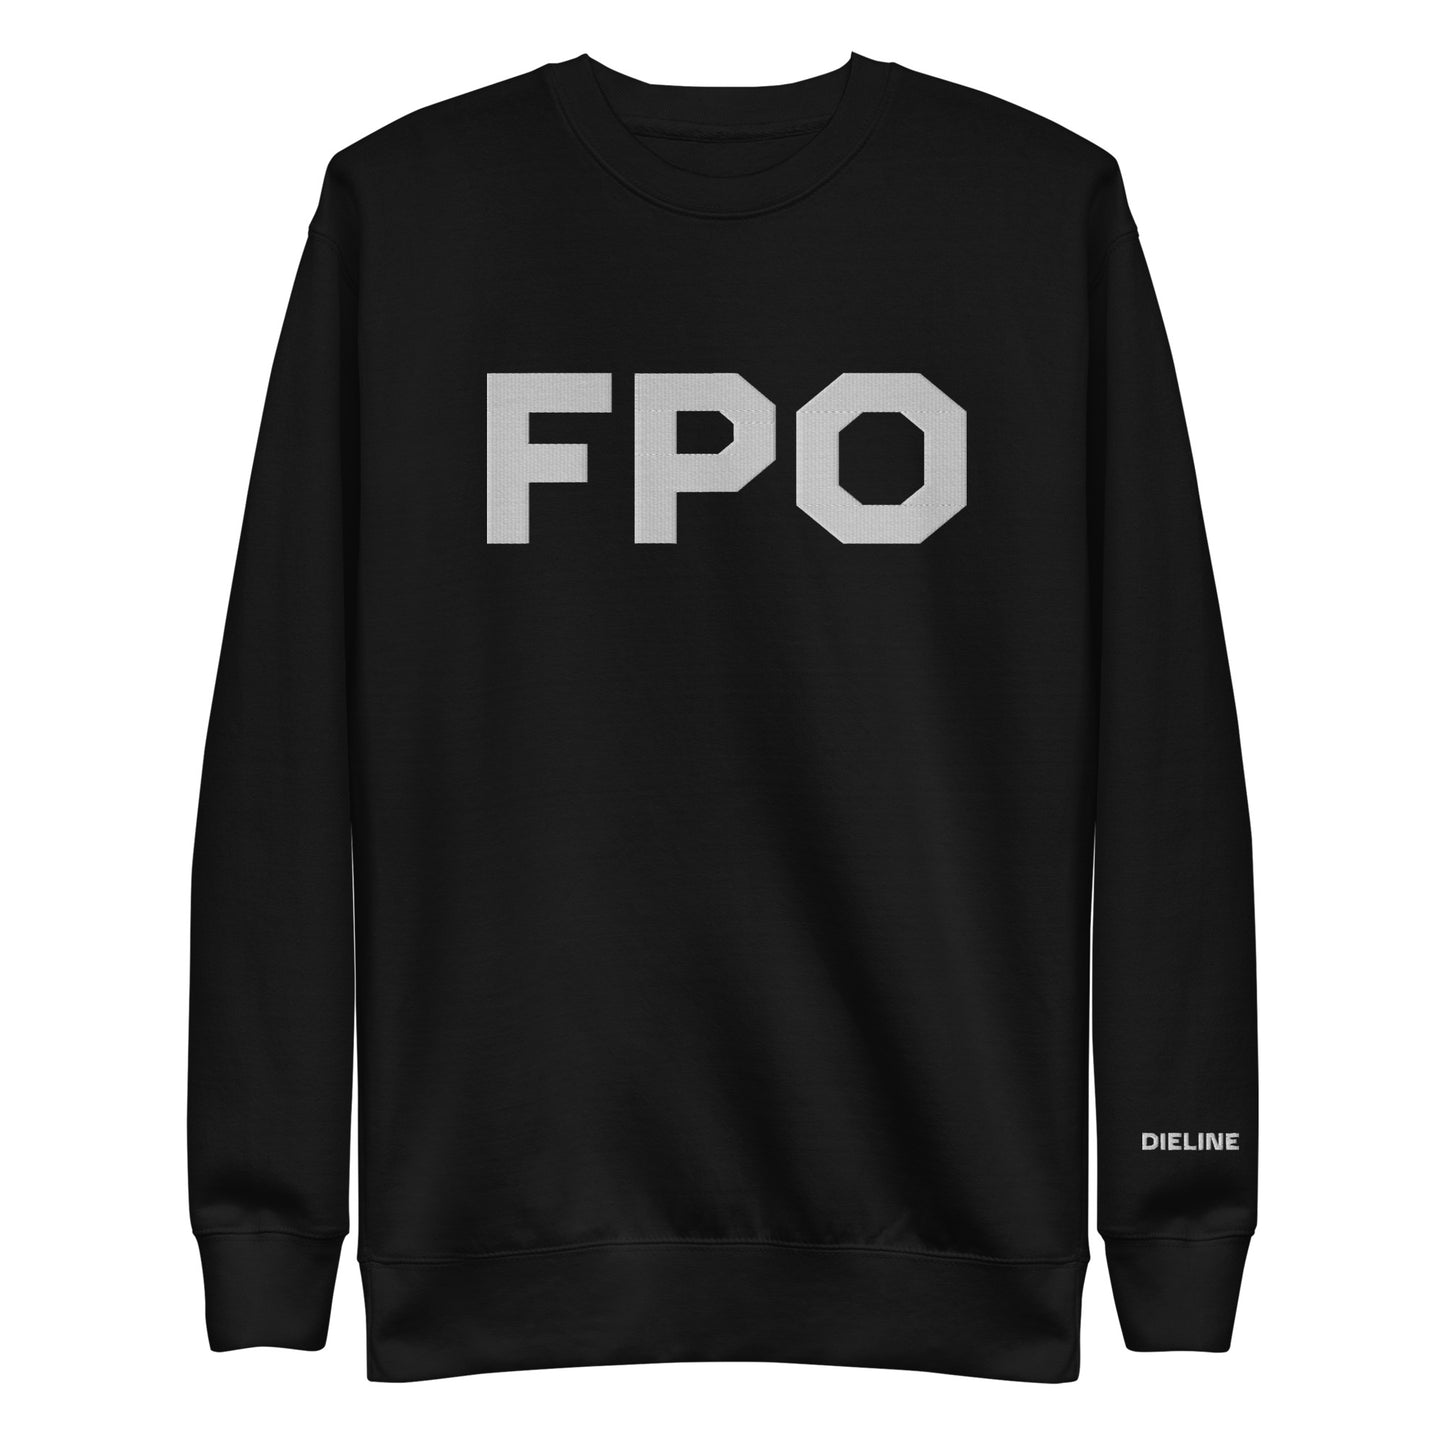 FPO Large Embroidery Unisex Premium Sweatshirt